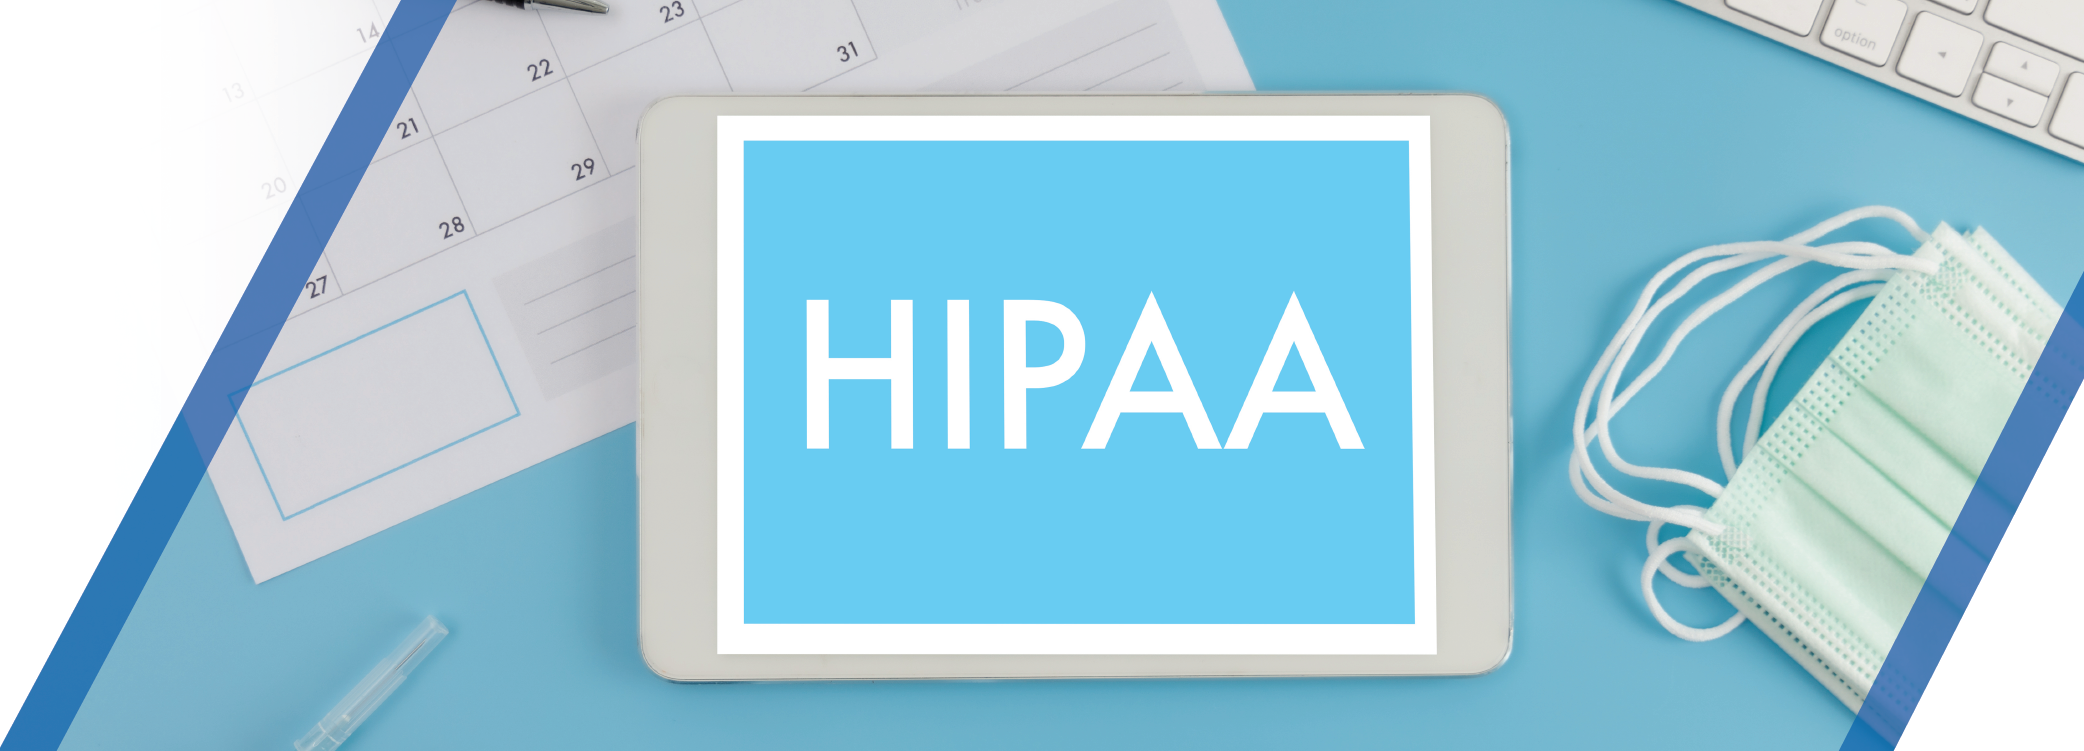 COVID HIPAA Flexibilities to Expire